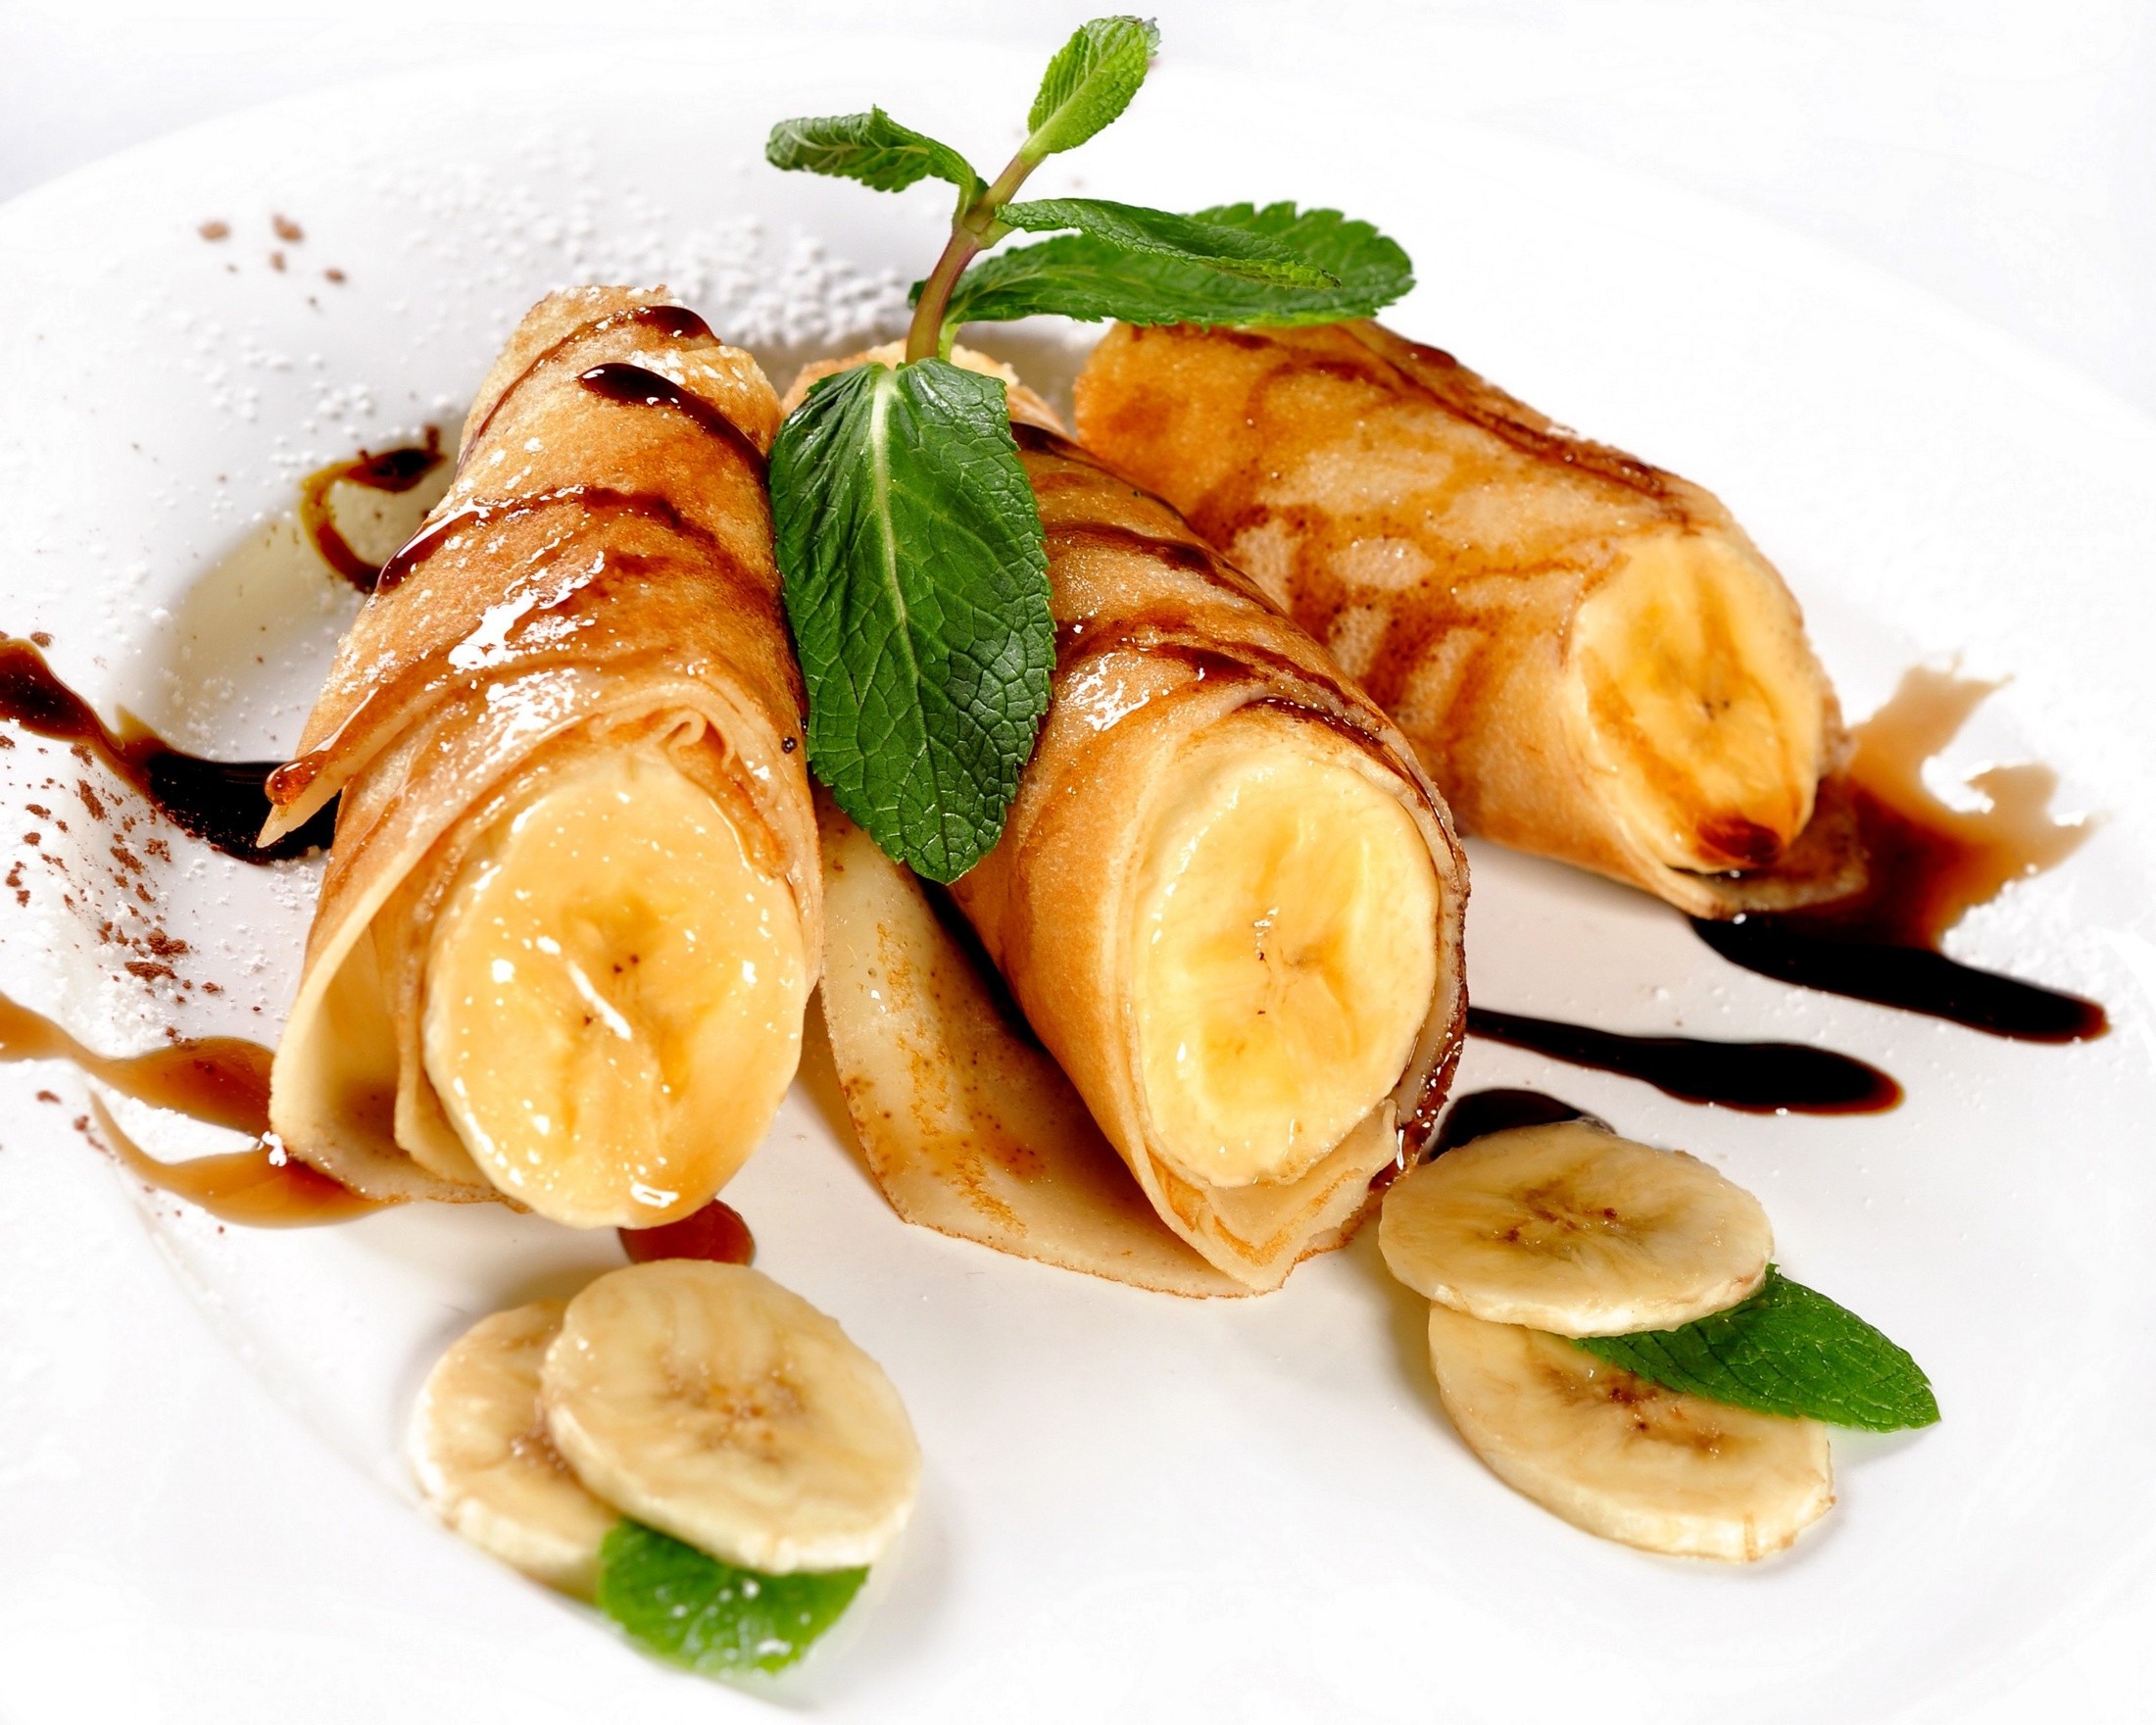 Sweet dessert of bananas wrapped in pancakes